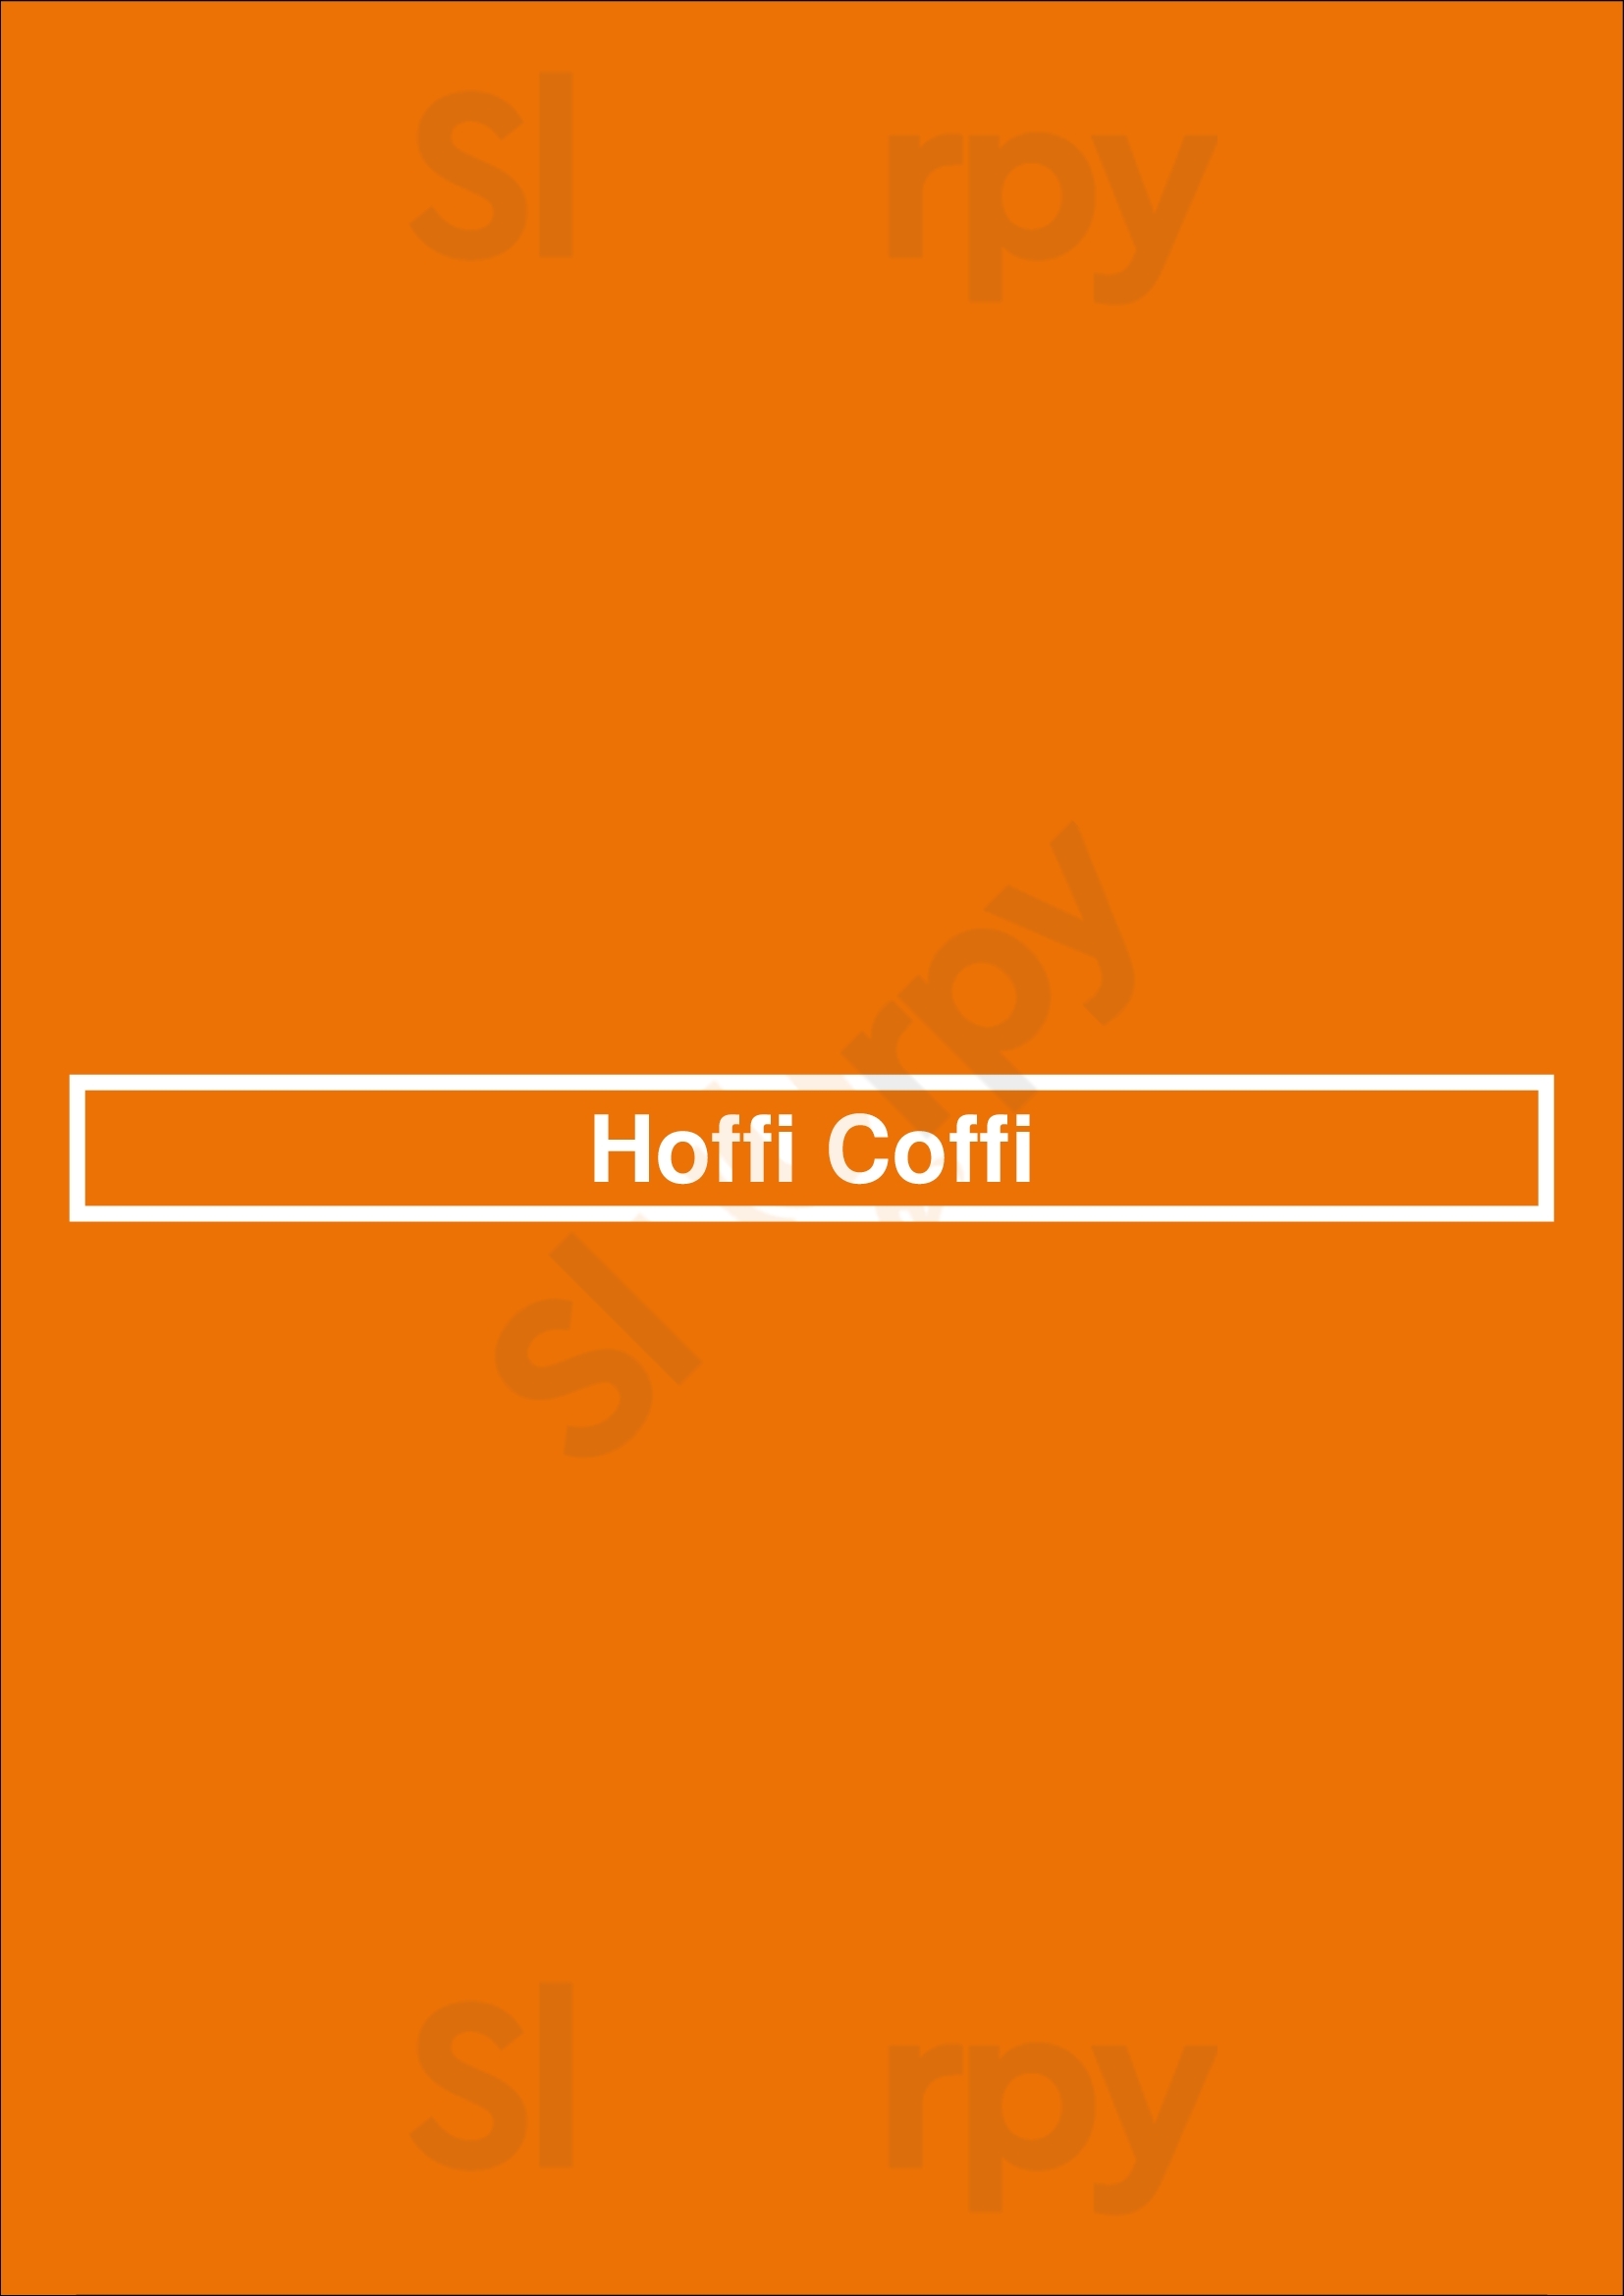 Hoffi Coffi Treforest Menu - 1